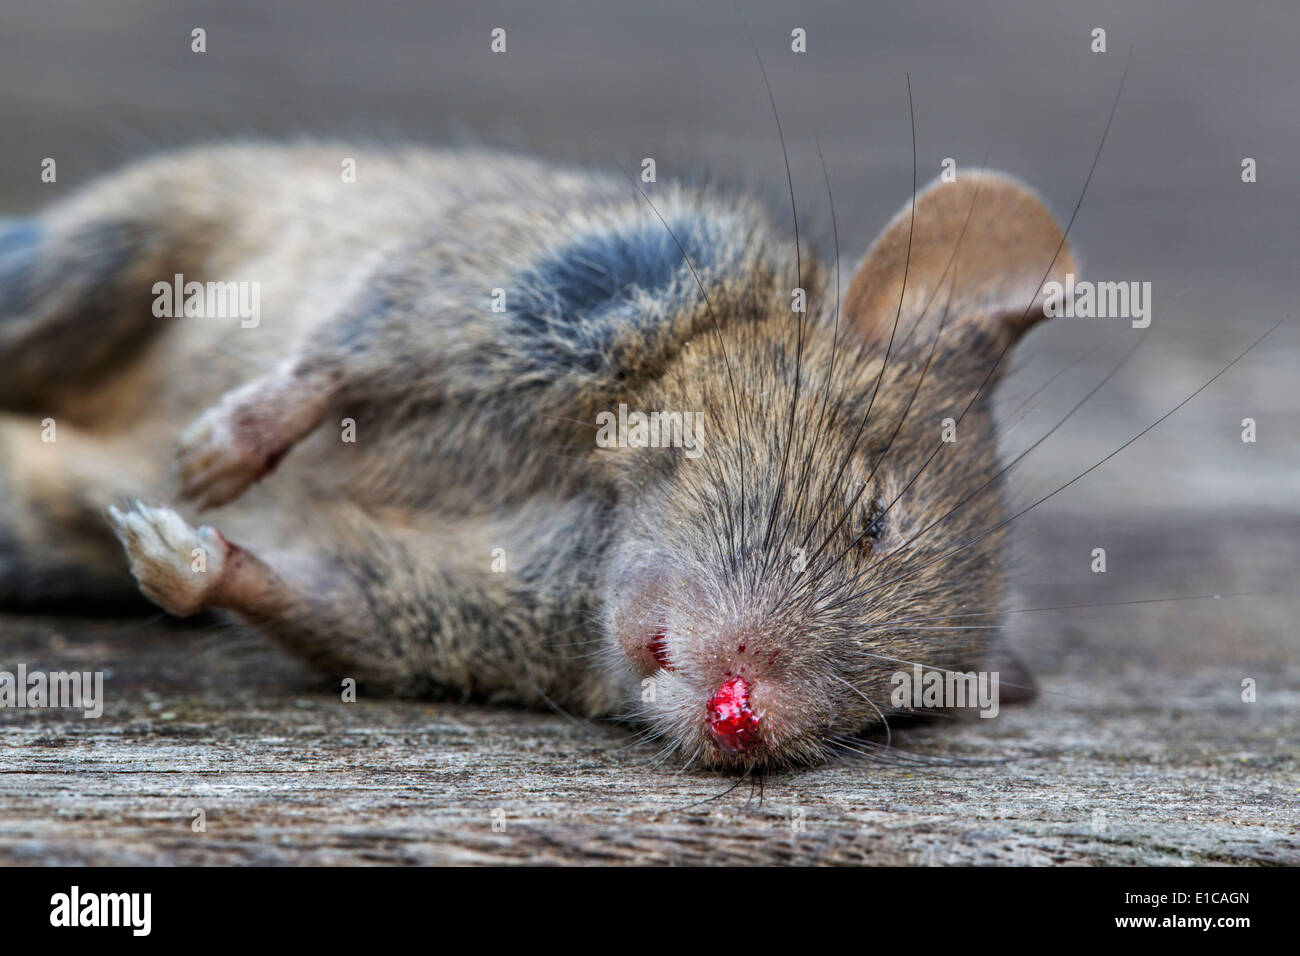 Nahaufnahme eines Toten juvenile braune Ratte (Rattus Norvegicus) Stockfoto